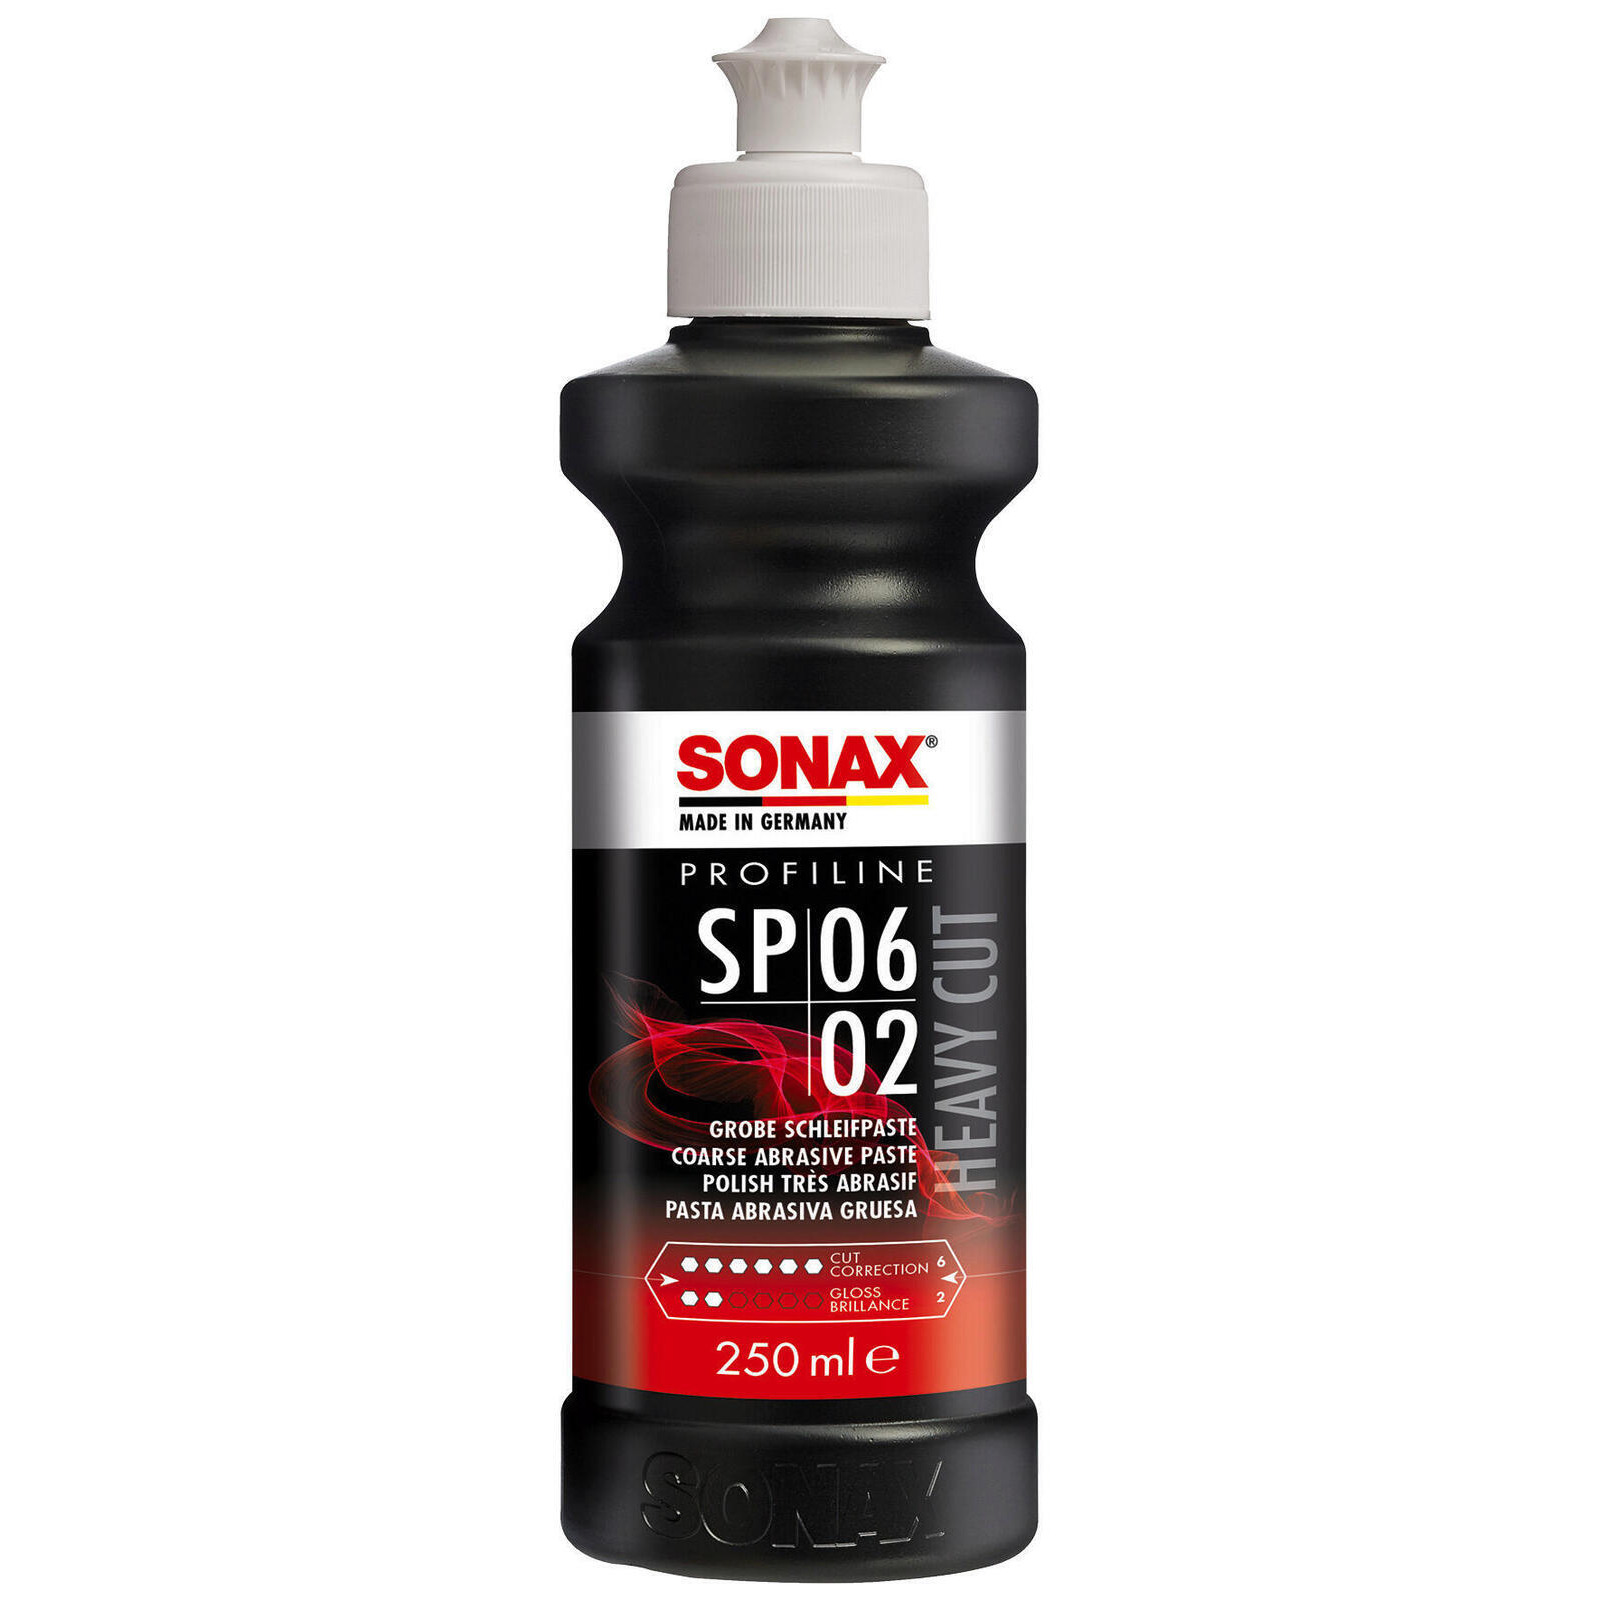 SONAX PROFILINE SP 06-02 250ml